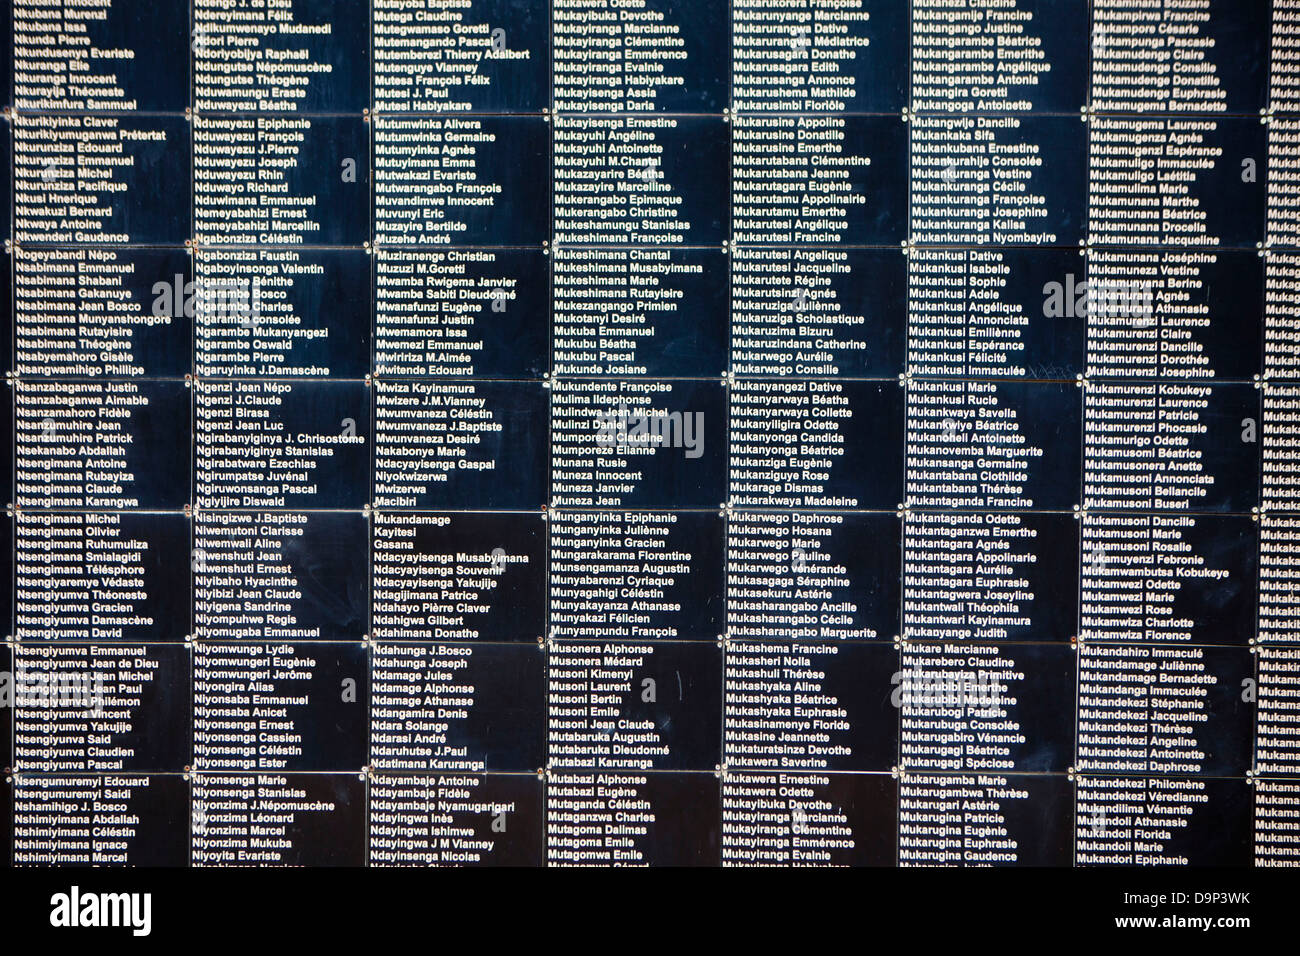 Ein Memorial Plaque Liste der Namen in Kigali Memorial Centre für Völkermord in Ruanda 1994. Stockfoto